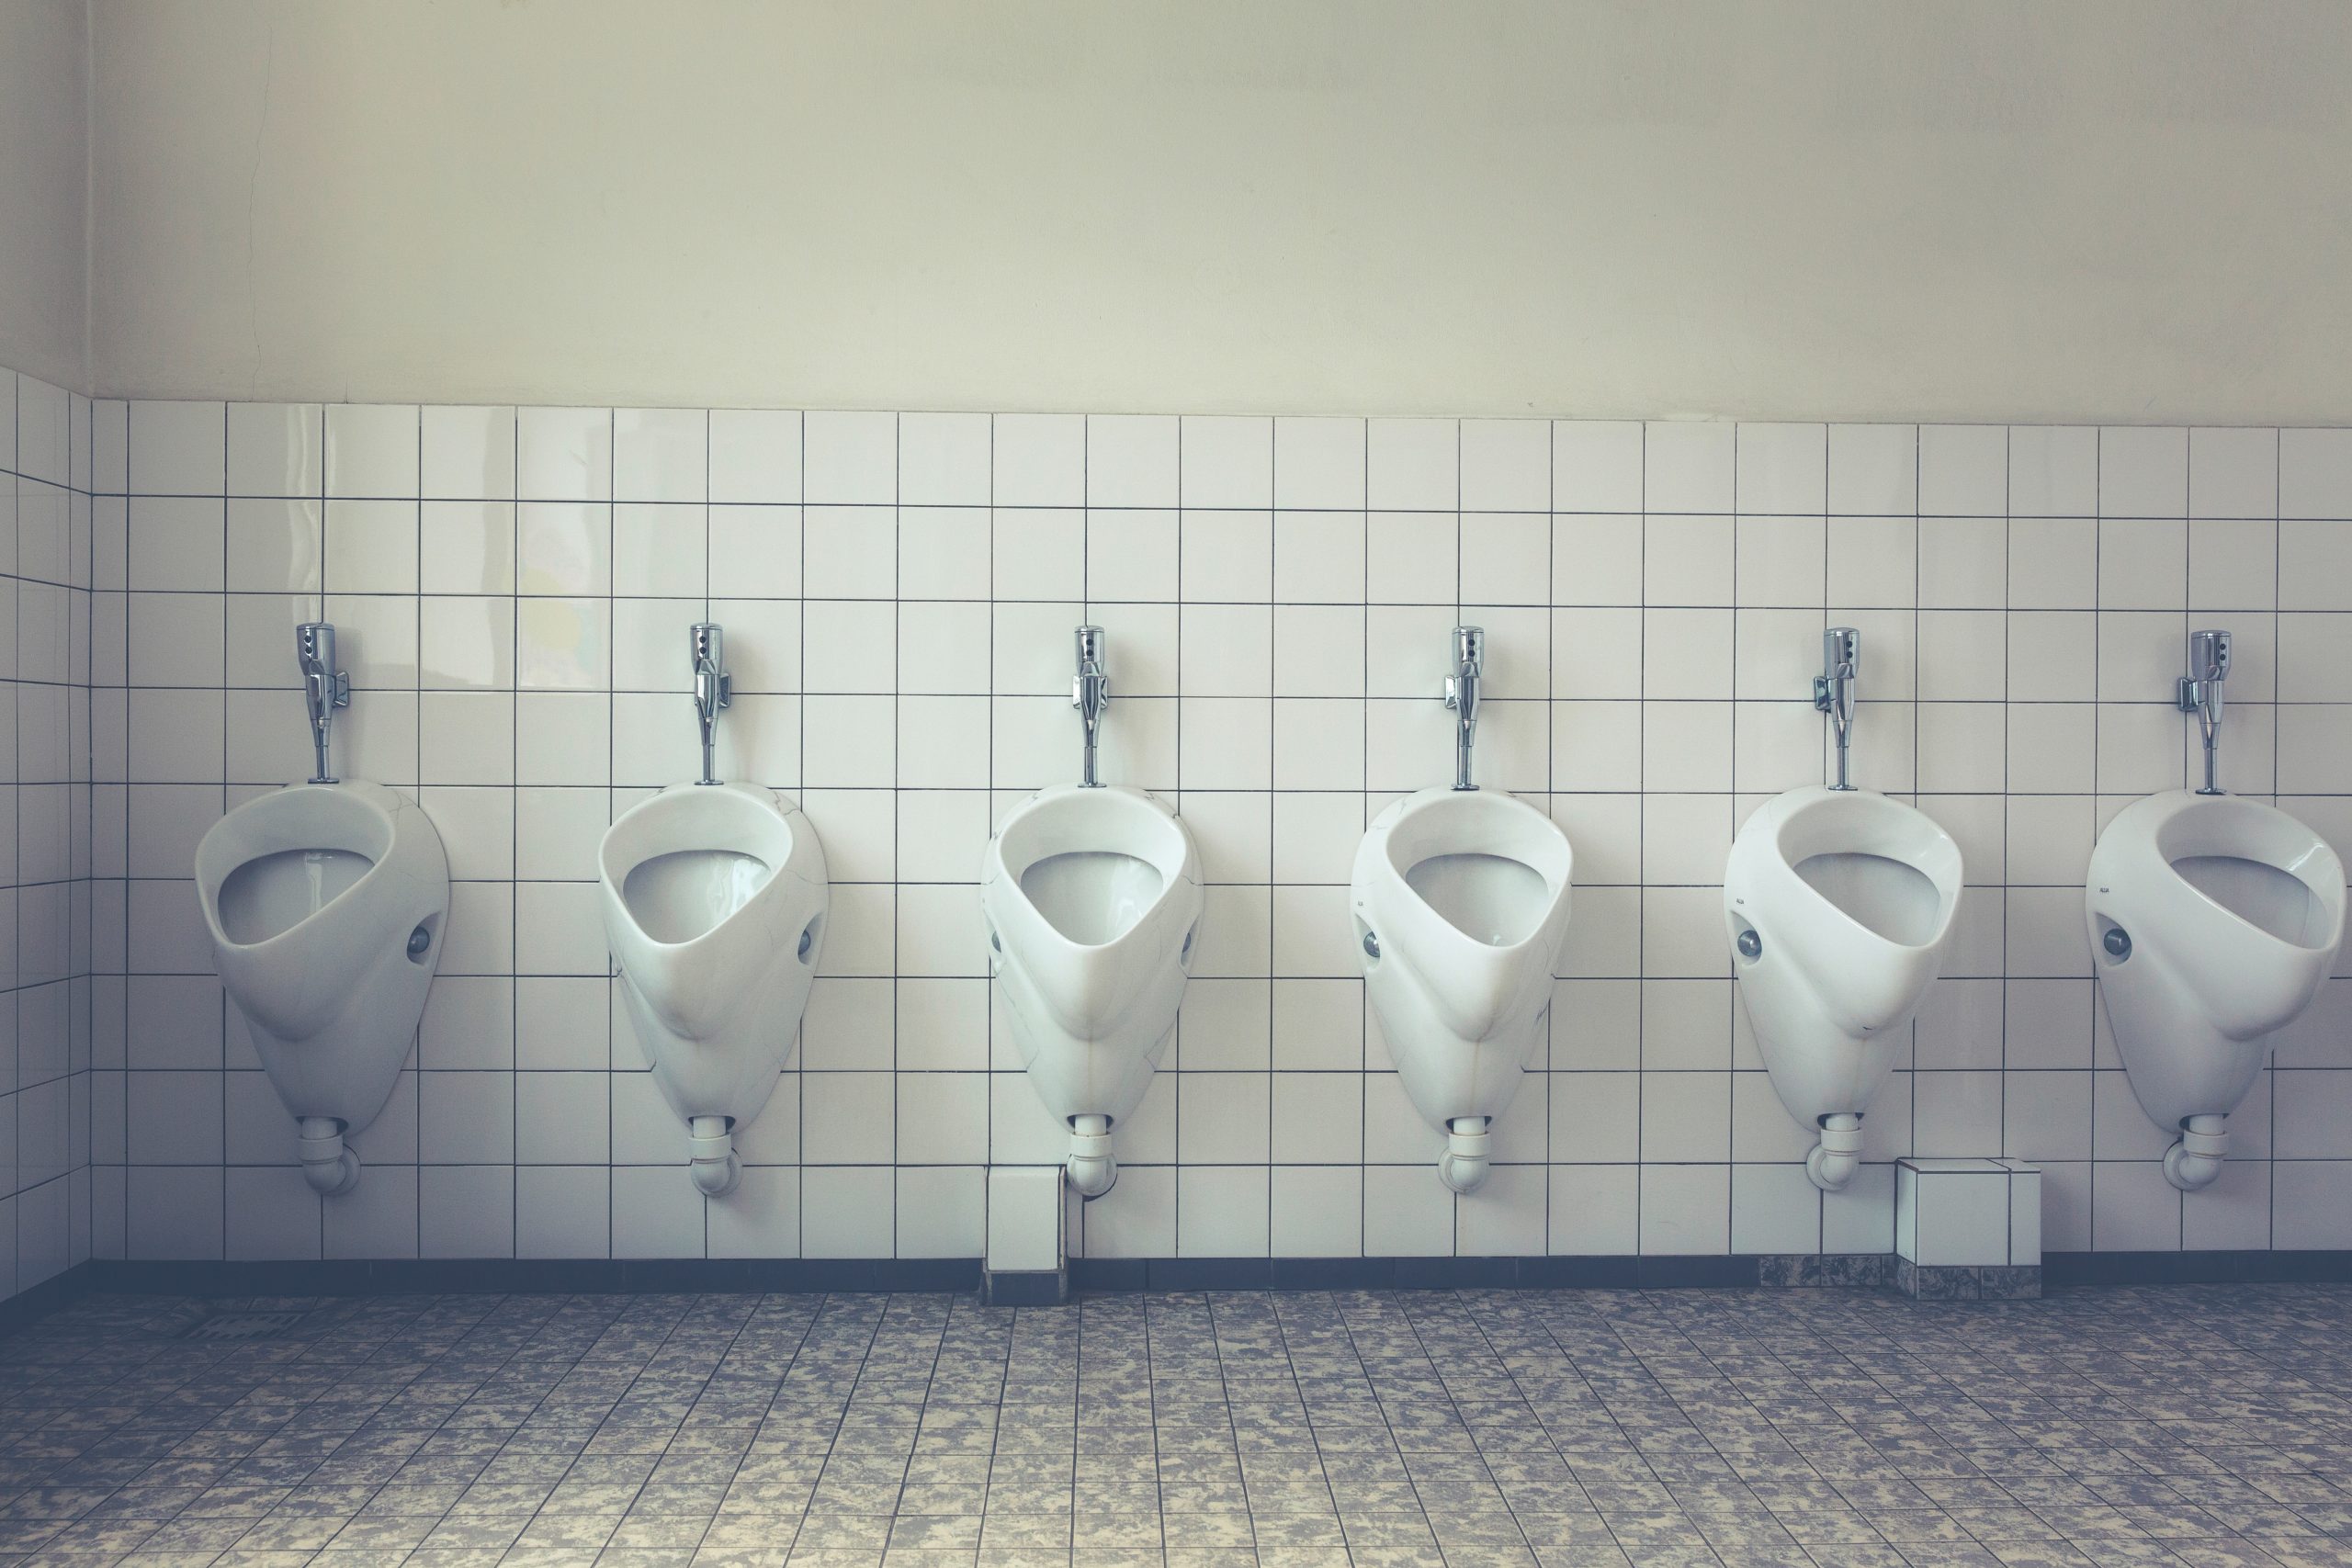 image of urinals | portable toilet rental washington oregon